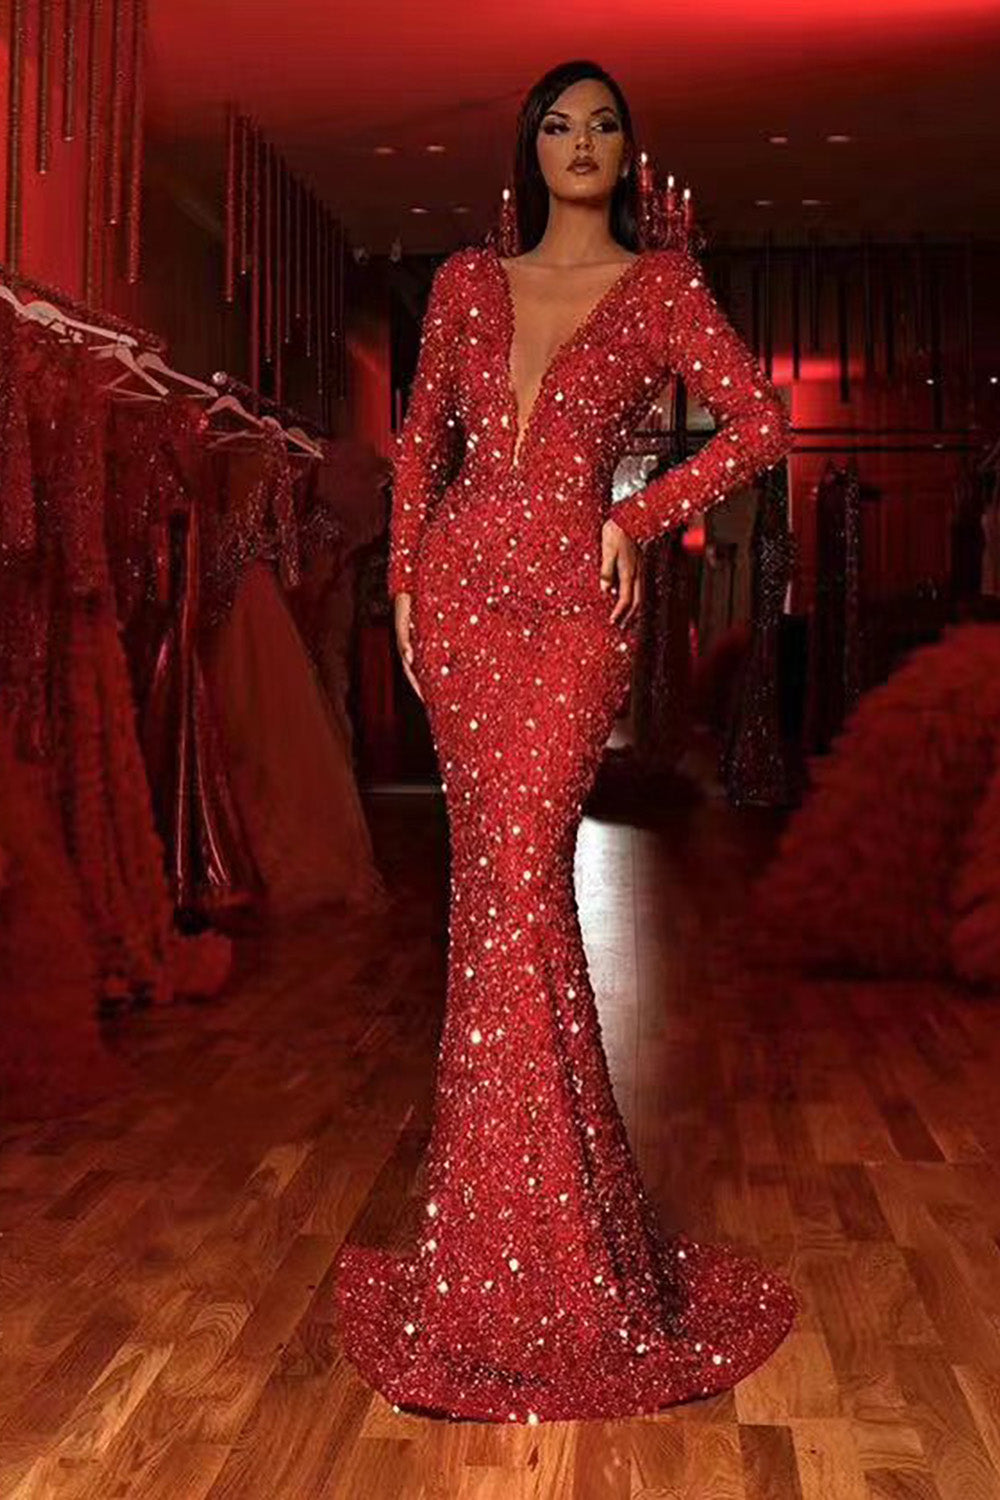 Red Deep V-neck Slim Sparkling Sequin Fishtail Dress - Chicida